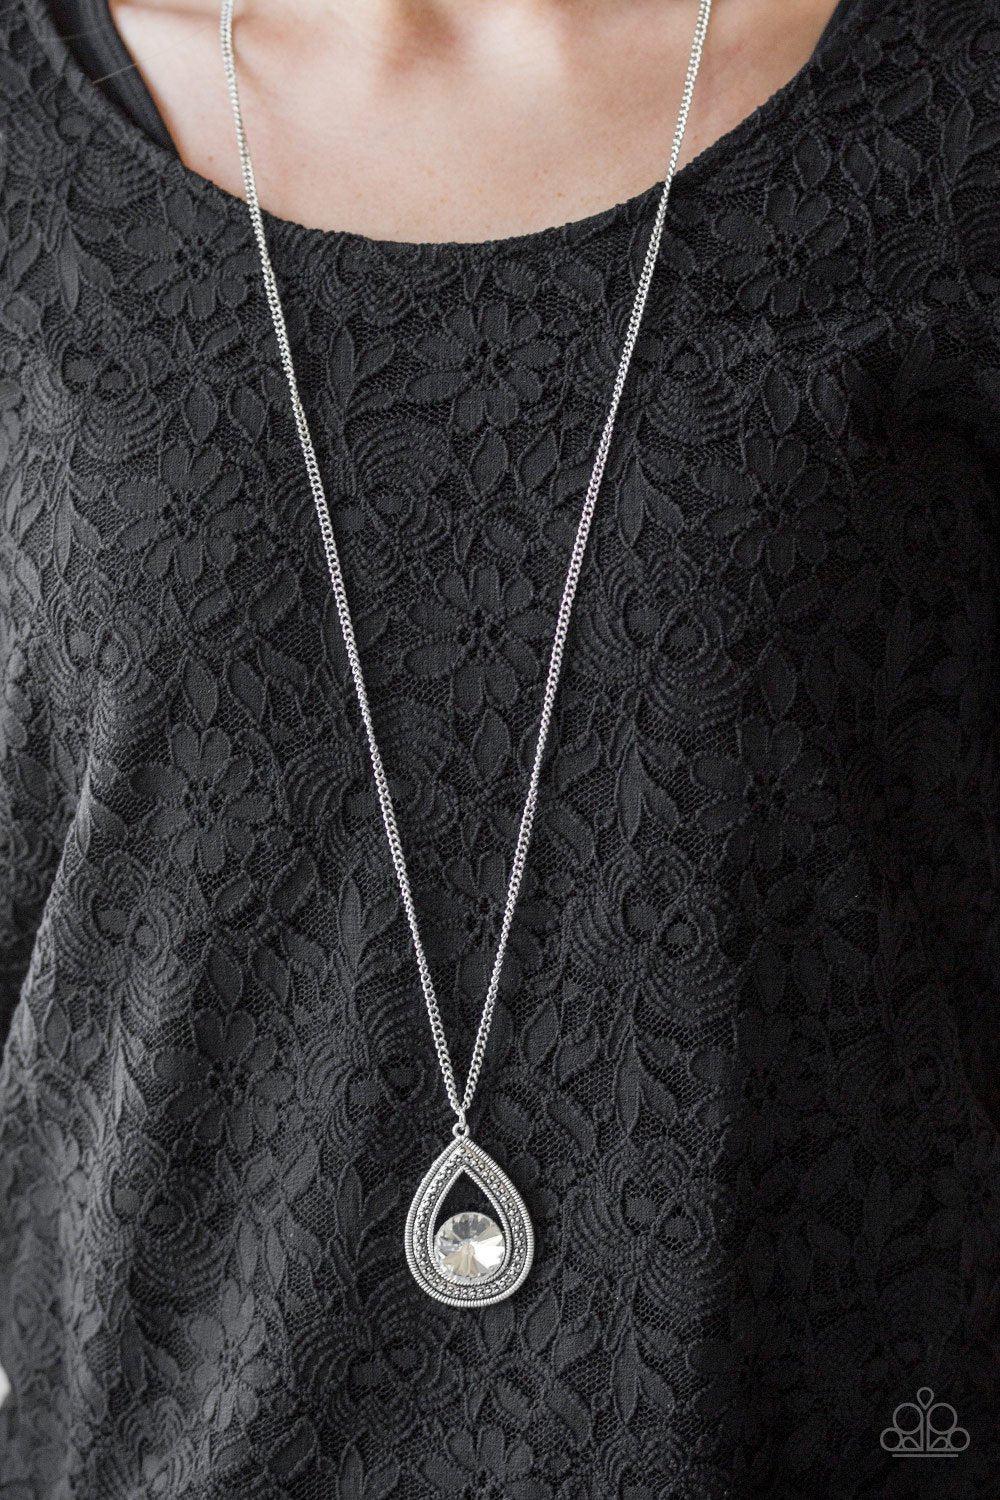 Castle Cabaret White Teardrop Rhinestone Necklace - Paparazzi Accessories-CarasShop.com - $5 Jewelry by Cara Jewels